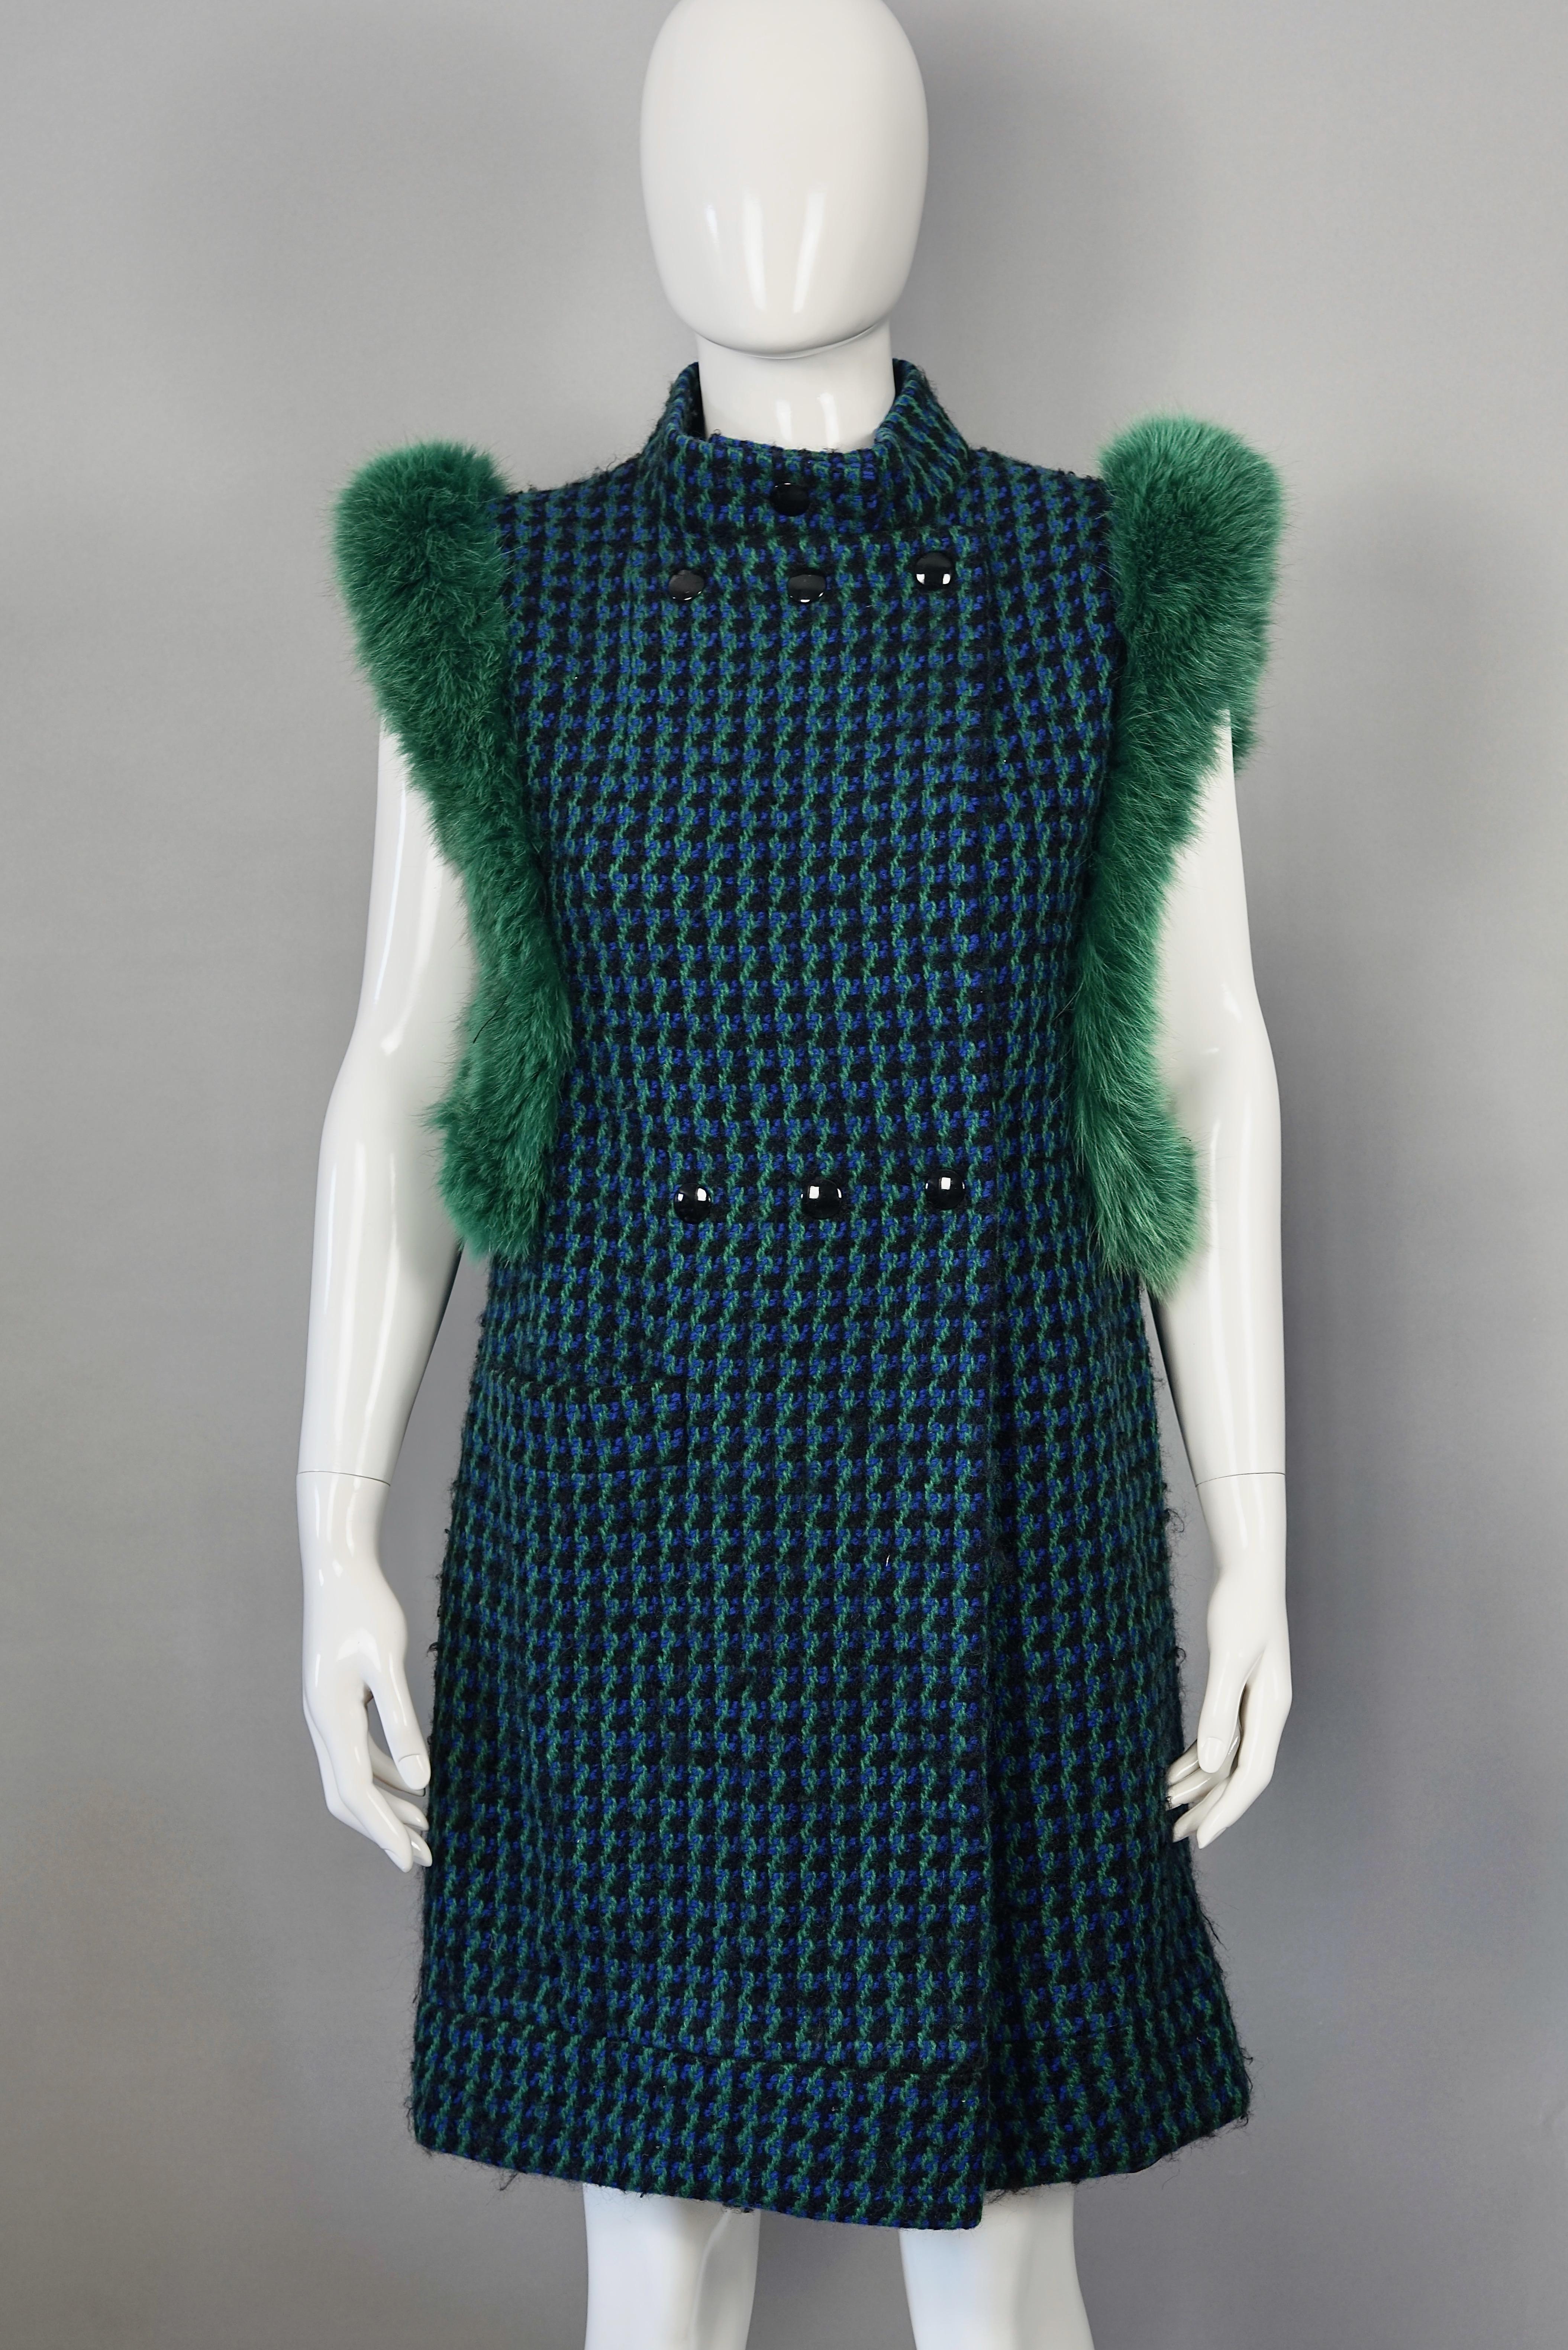 Vintage 1970s PIERRE CARDIN Mod Knitted Fur Vest Coat

Measurements taken laid flat, please double bust, waist and hips:
Shoulder: 17.71 inches (45 cm)
Bust: 19.68 inches (50 cm)
Waist: 19.29 inches (49 cm)
Hips: 20.47 inches (52 cm)
Length: 36.22